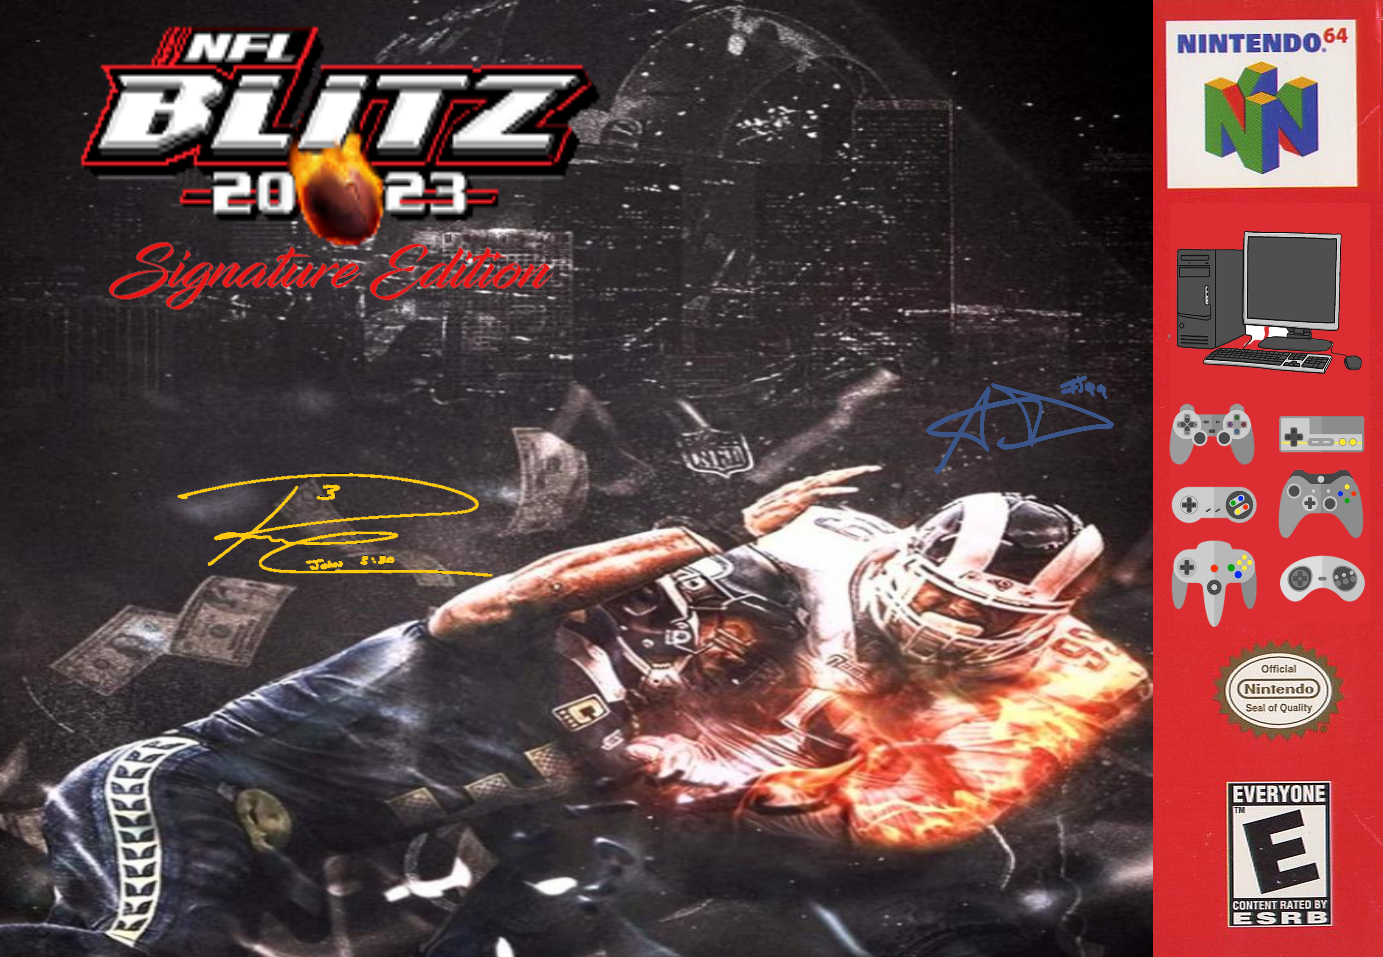 NFL BLITZ 2023 Signature Edition/Resurrection Other Games